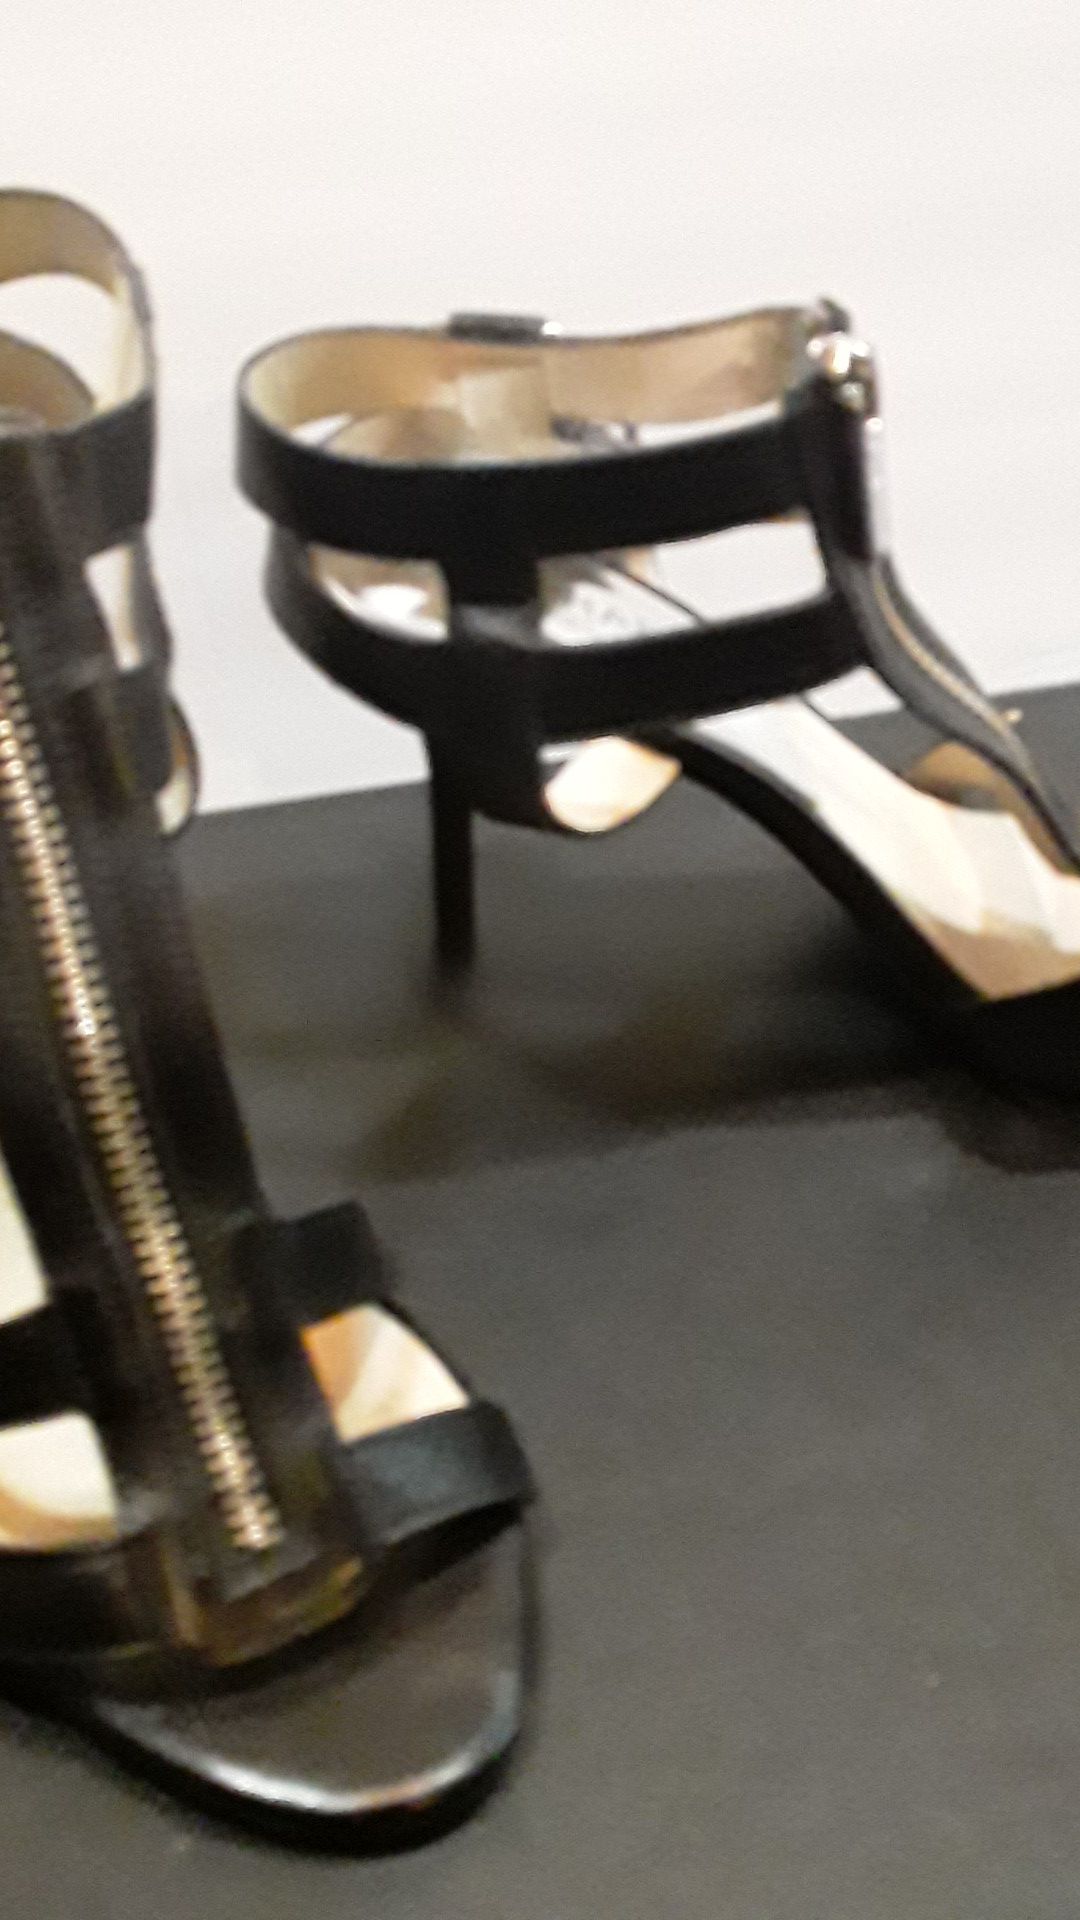 Michael Kors black leather heels size 6